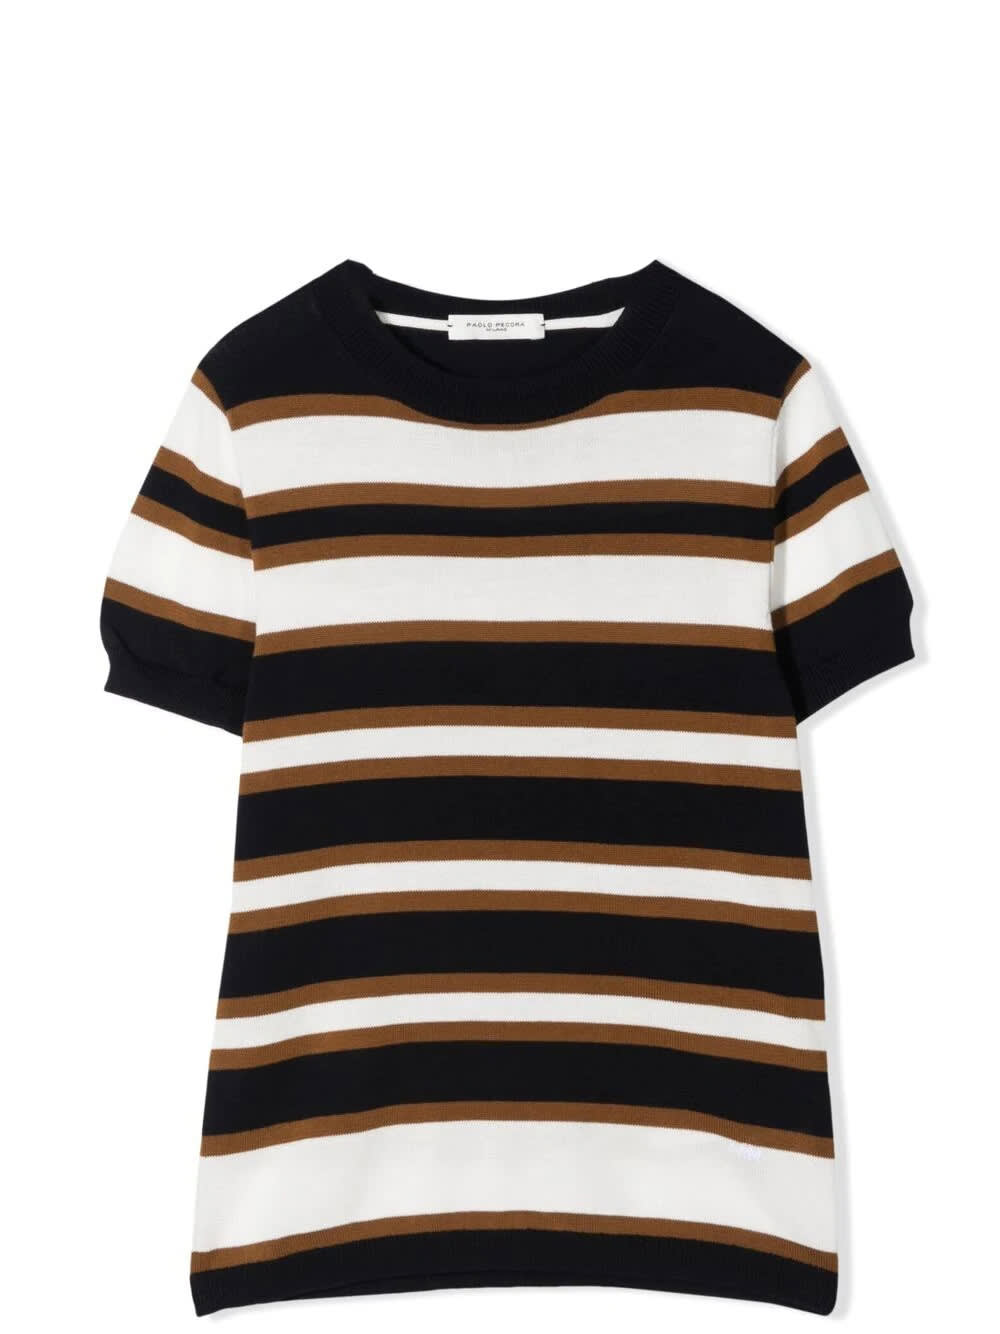 Paolo Pecora Striped Baby T-shirt